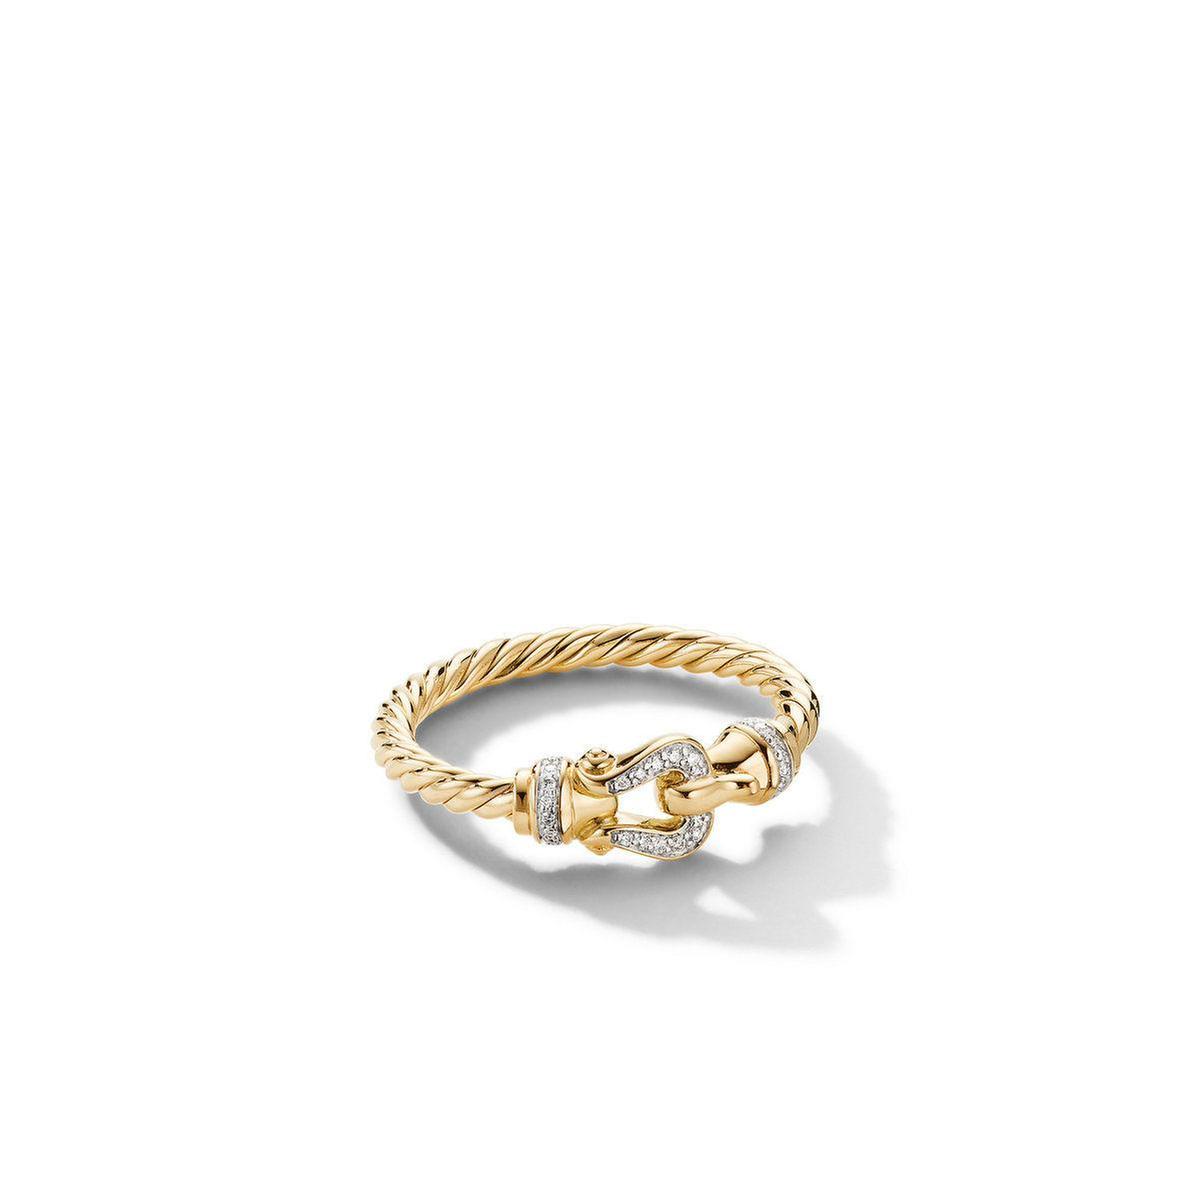 David Yurman Petite Buckle Ring in 18K Yellow Gold with Diamonds | Size 9.5